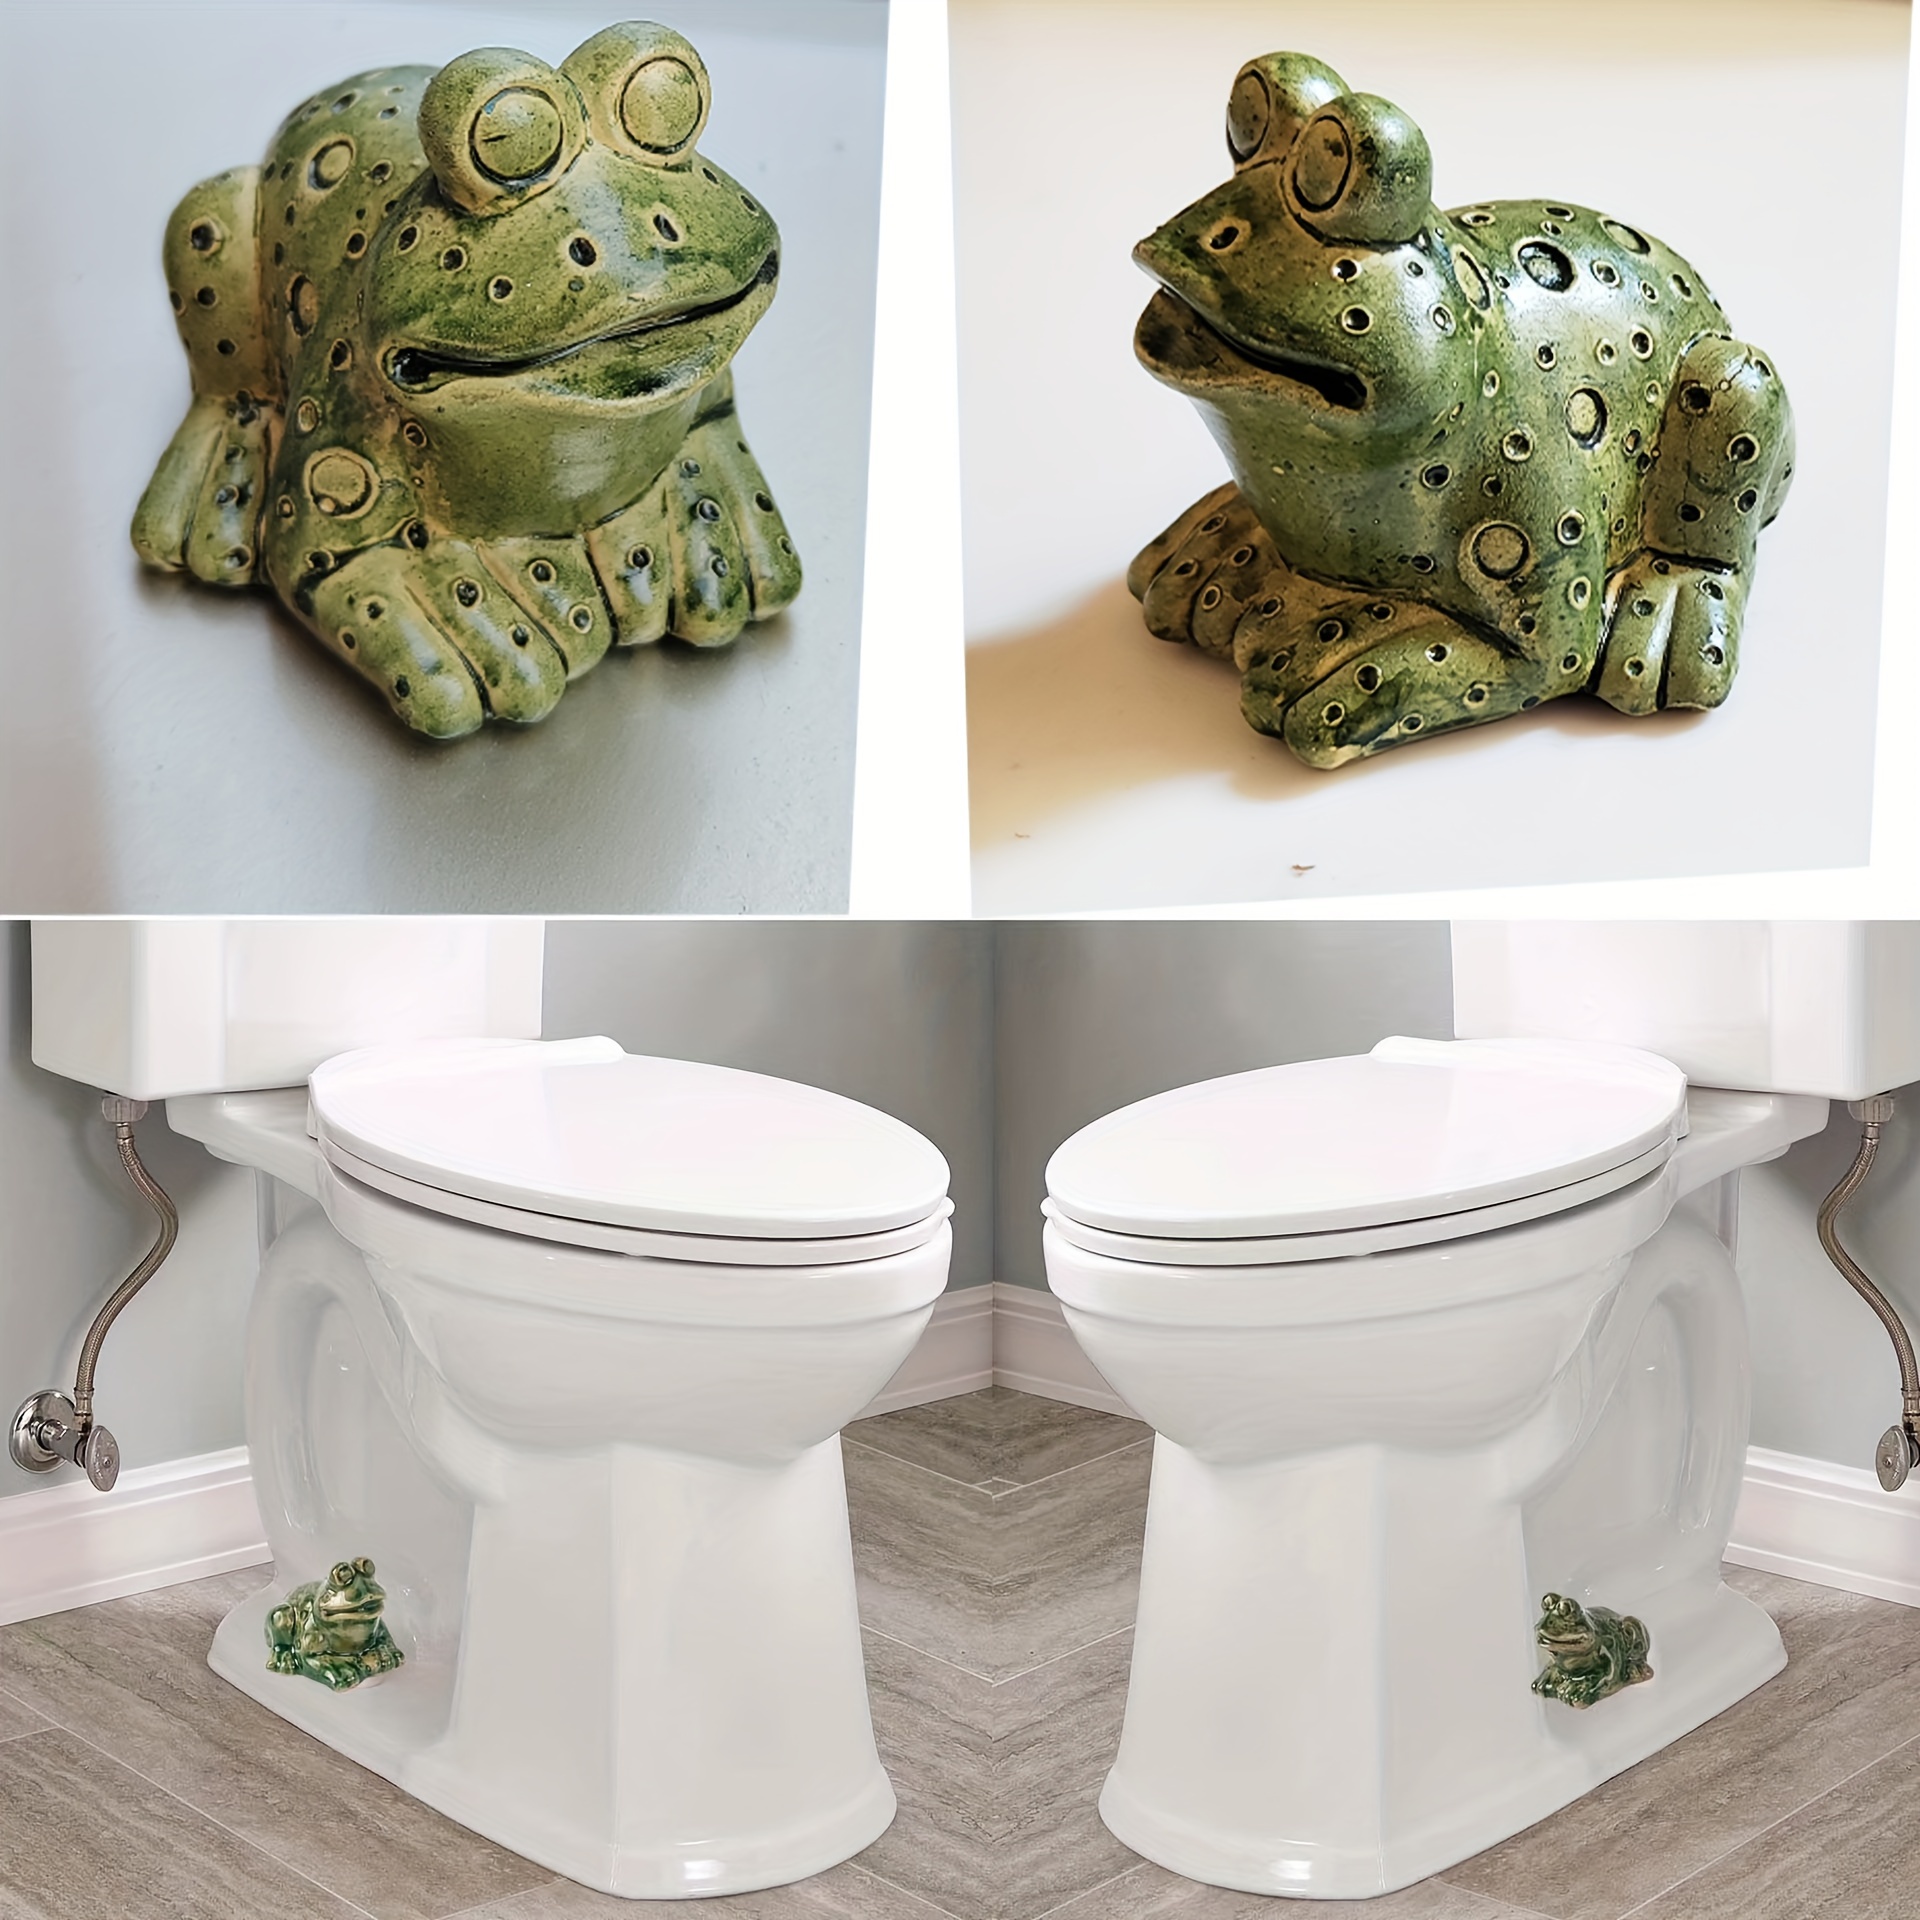 

Creative Resin Frog Toilet Bolt Cap - Decorative Bathroom Accessory, Craft Tool & Supply